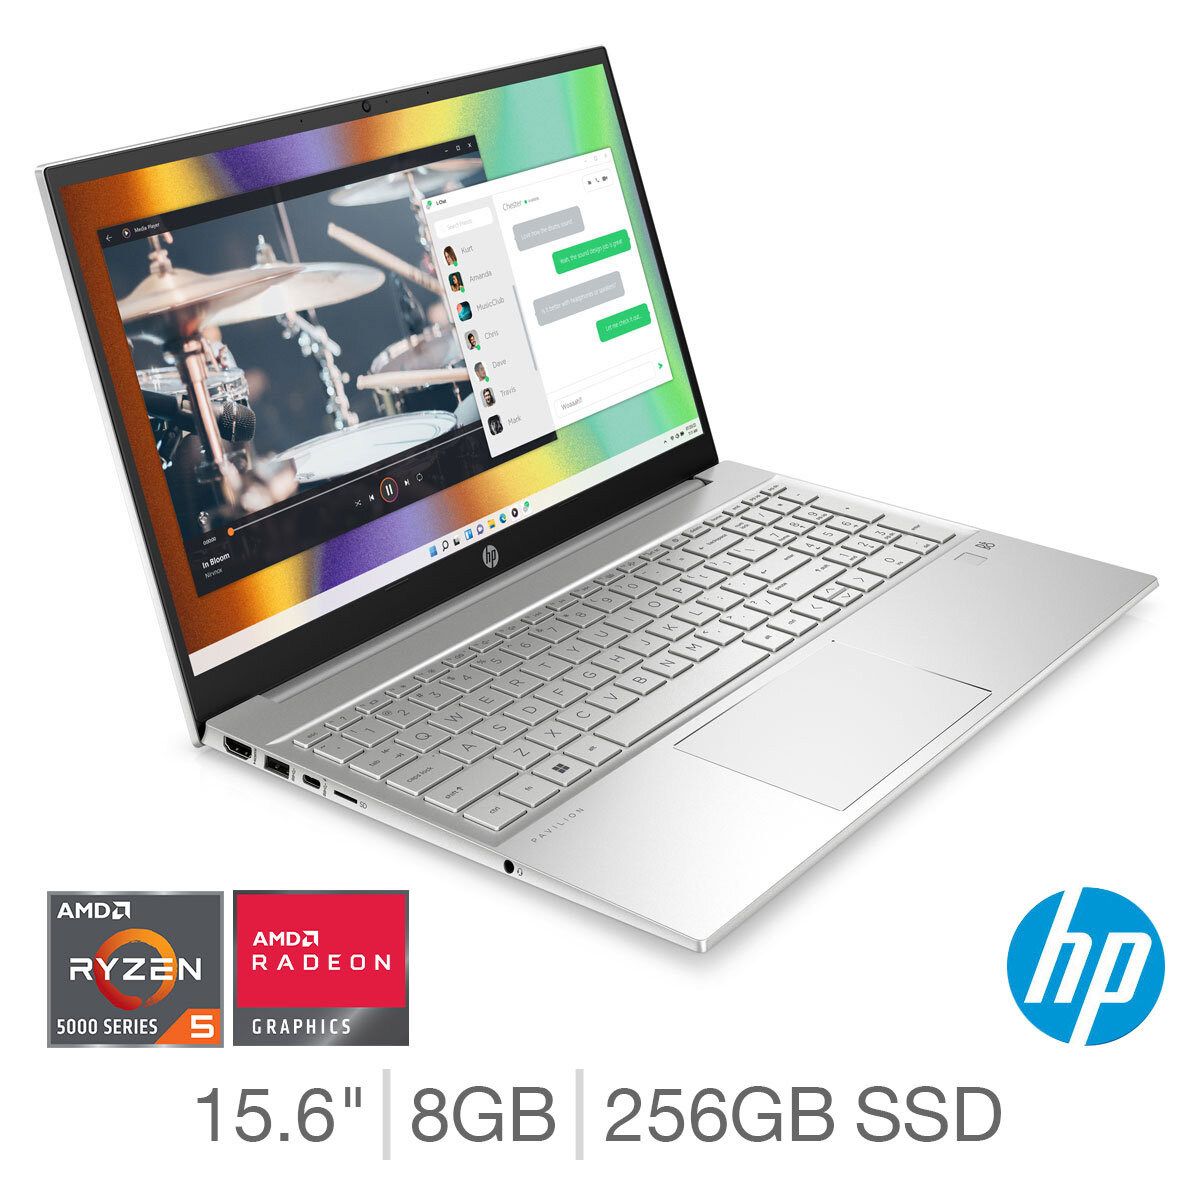 Buy HP Pavilion, AMD Ryzen 5, 8GB RAM, 256GB SSD, 15.6 Inch Laptop, 15-eh1013na at costco.co.uk